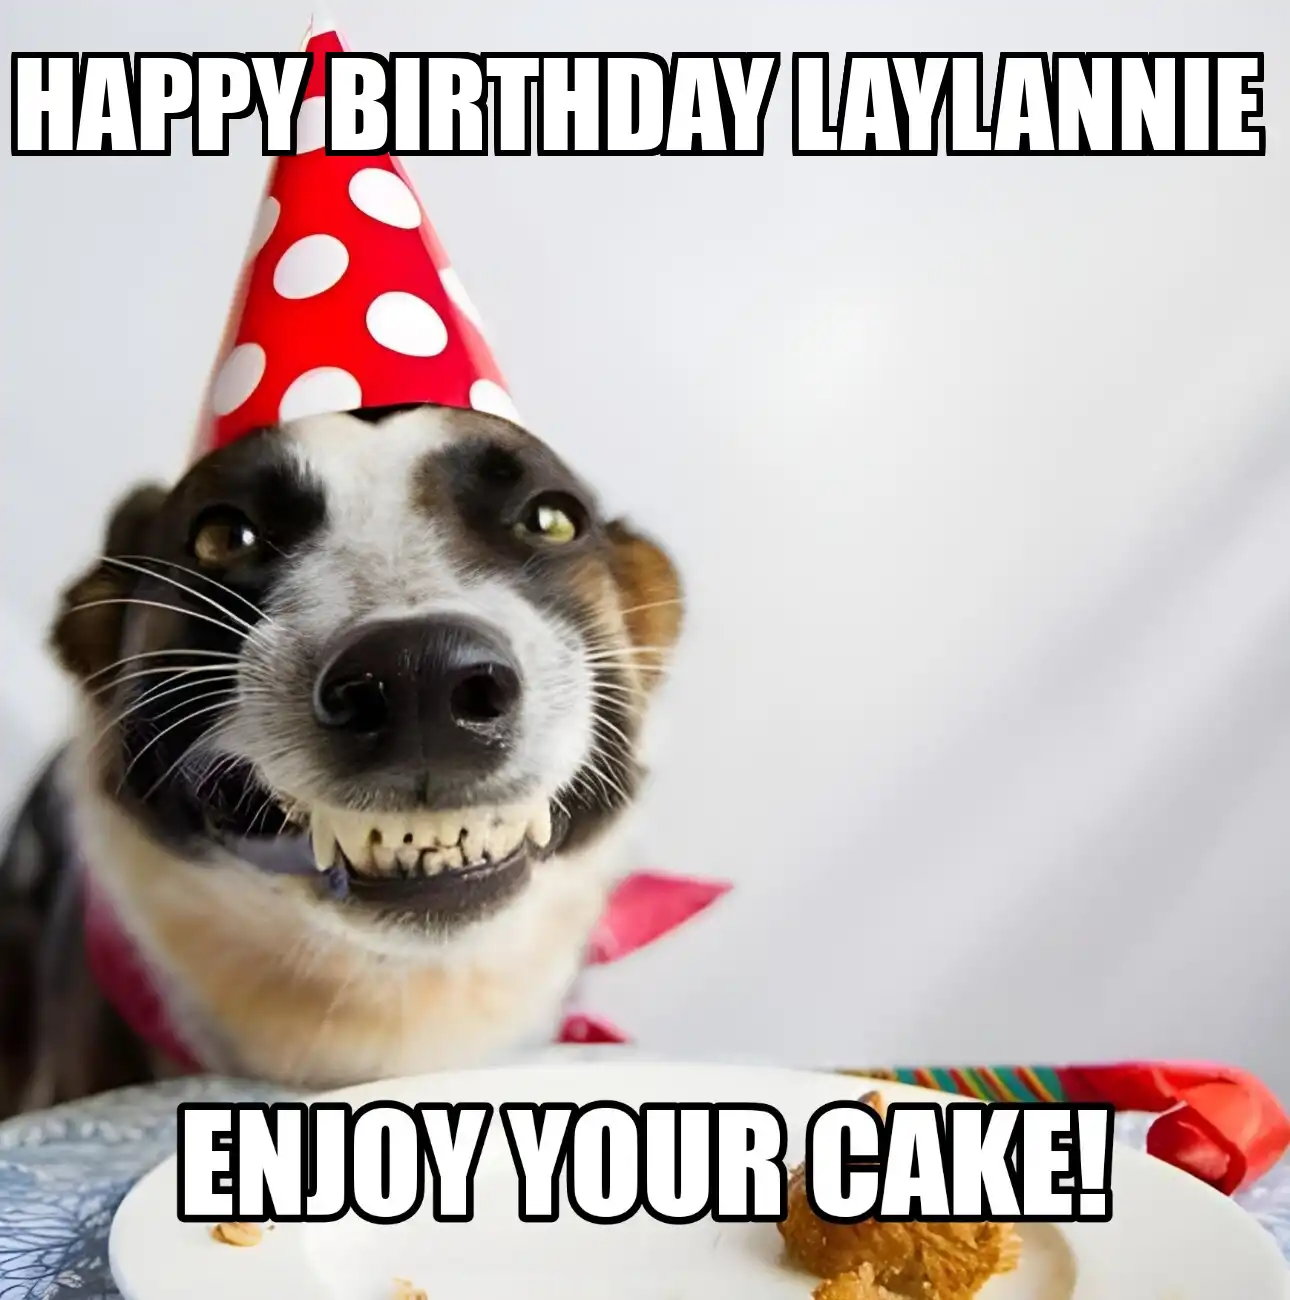 Happy Birthday Laylannie Enjoy Your Cake Dog Meme